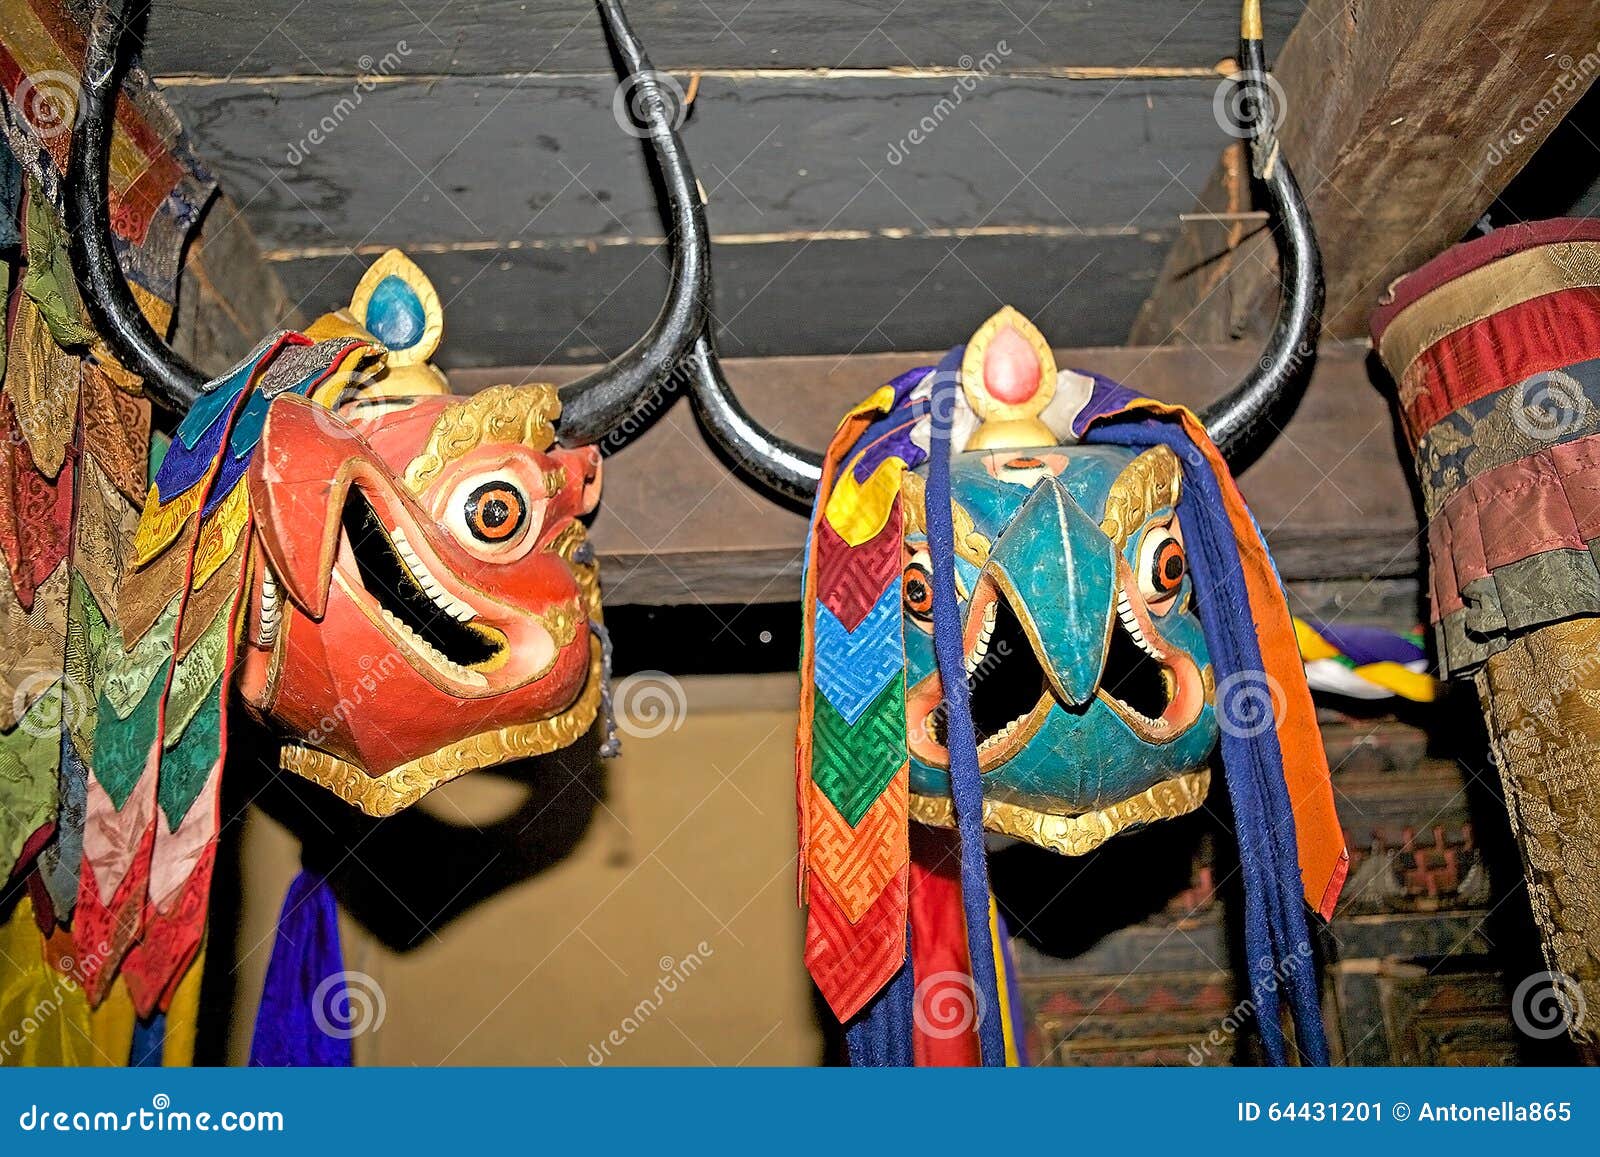 mask dances, bhutan